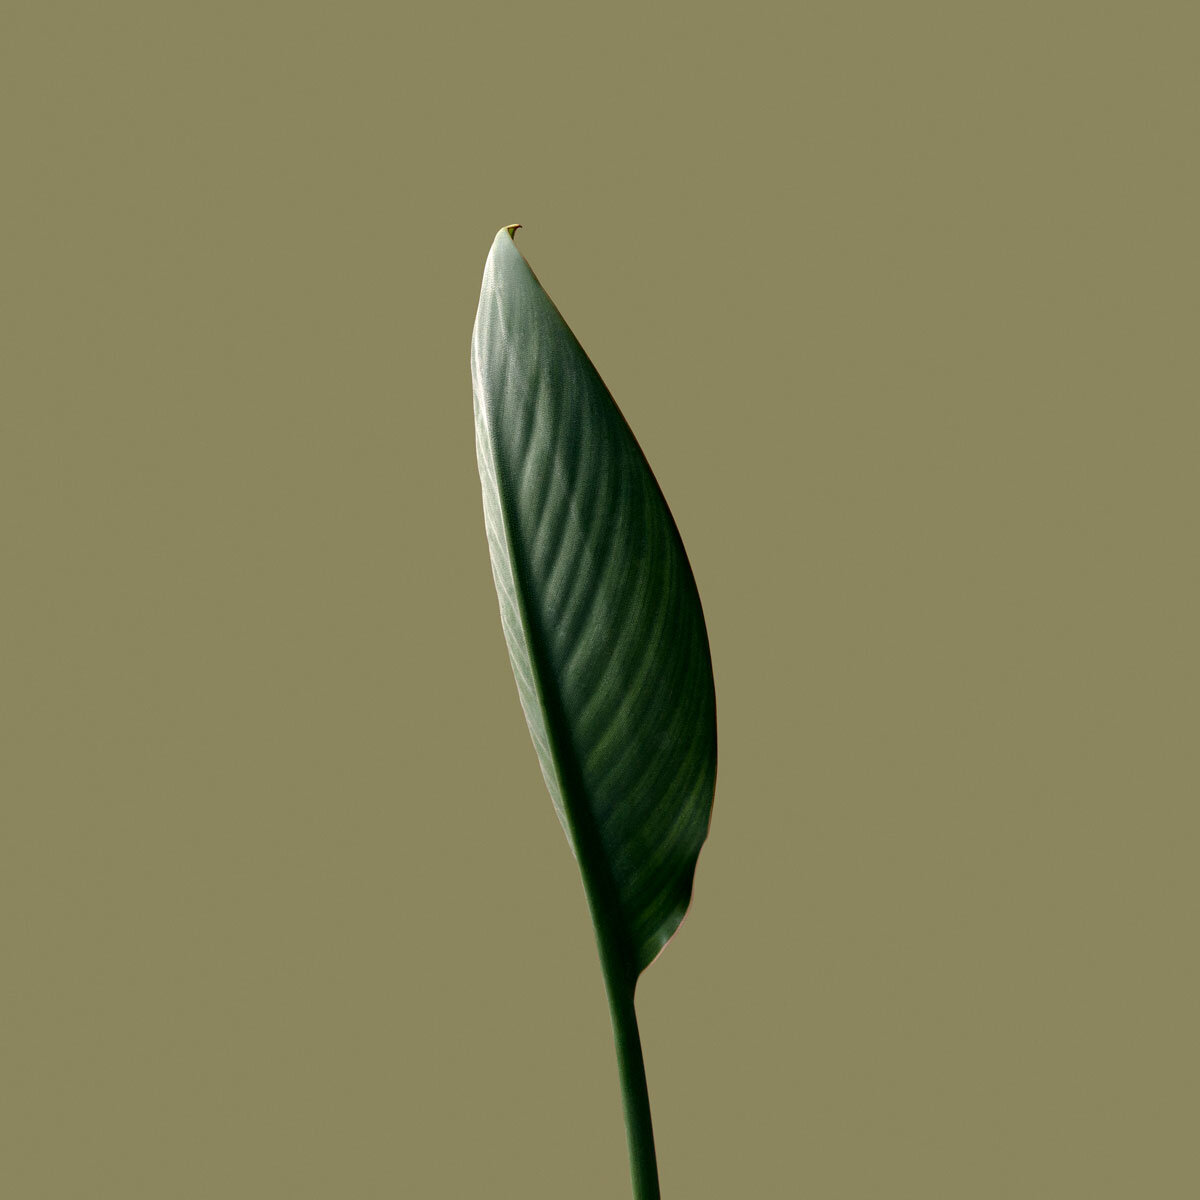 Strelitzia-leaf.jpg